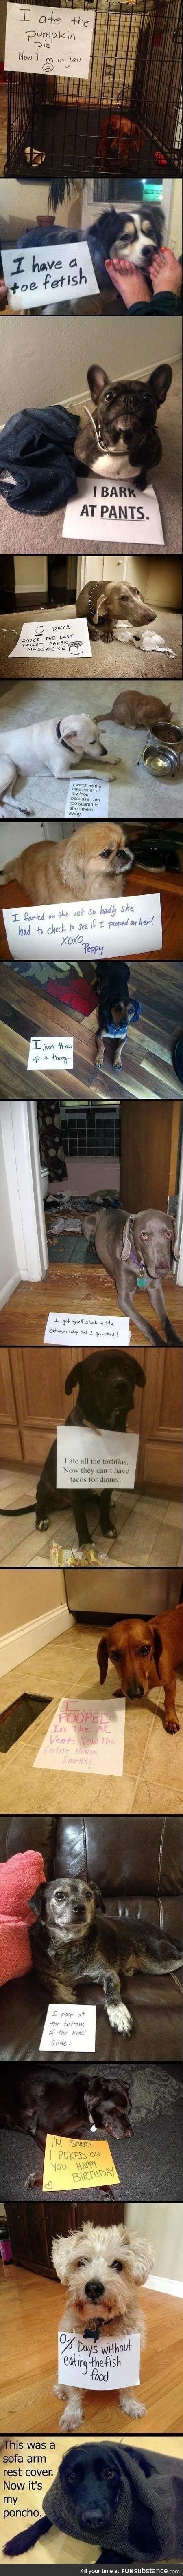 Dog shaming